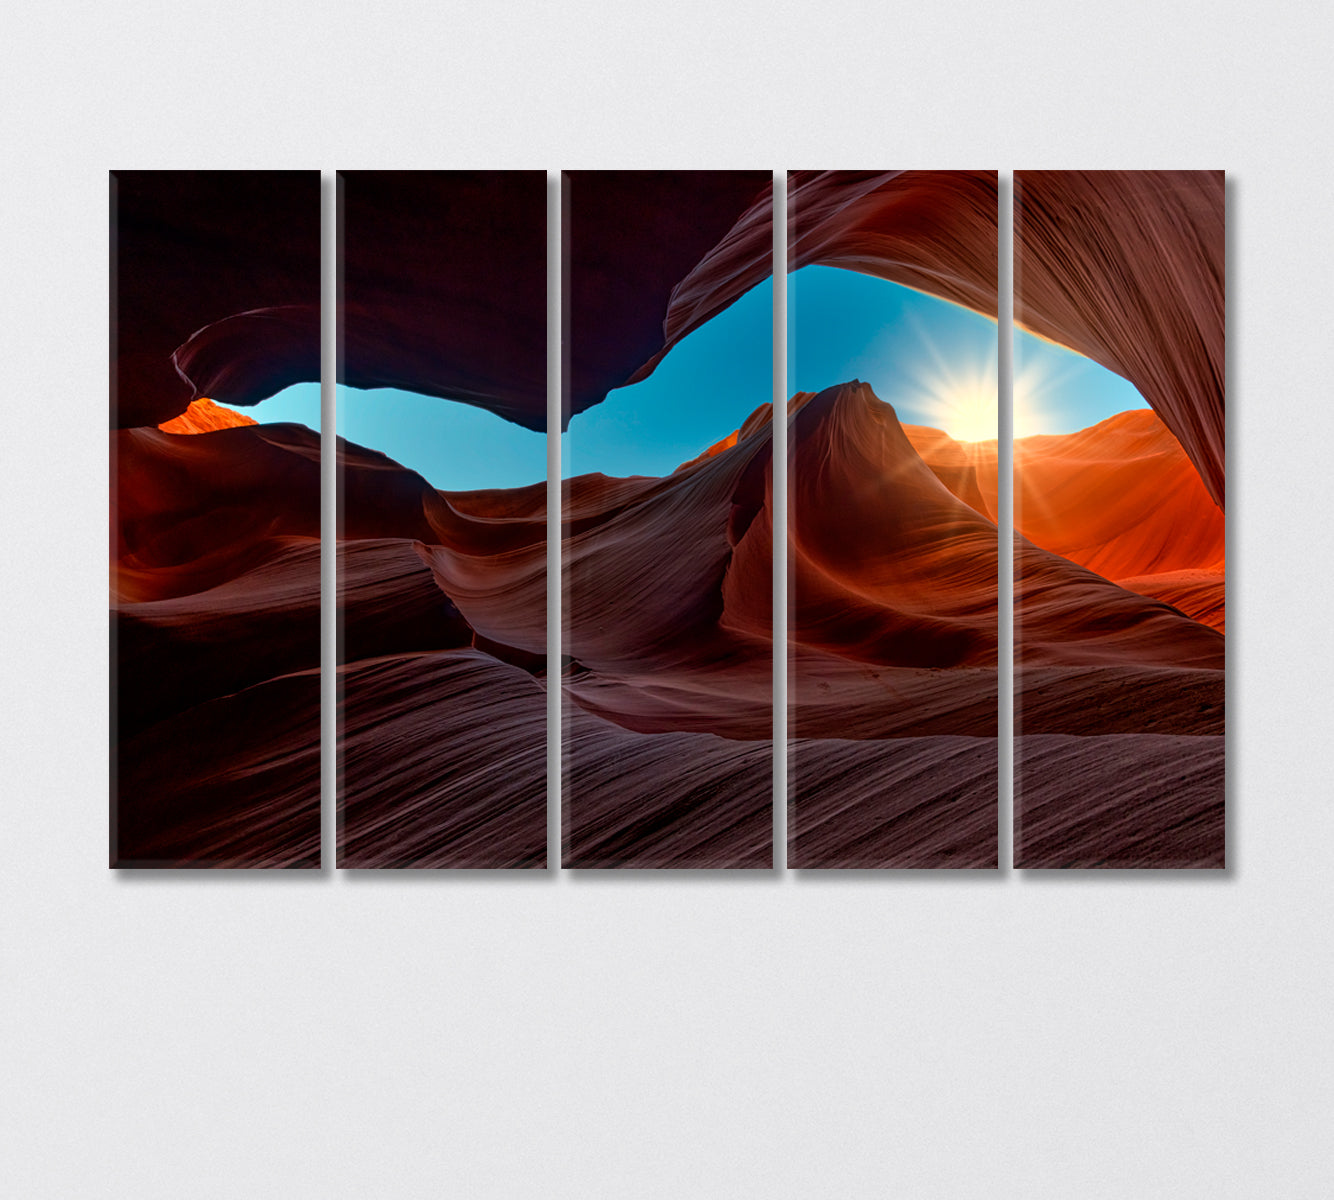 Sandstone in Antelope Canyon Arizona USA Canvas Print-Canvas Print-CetArt-5 Panels-36x24 inches-CetArt